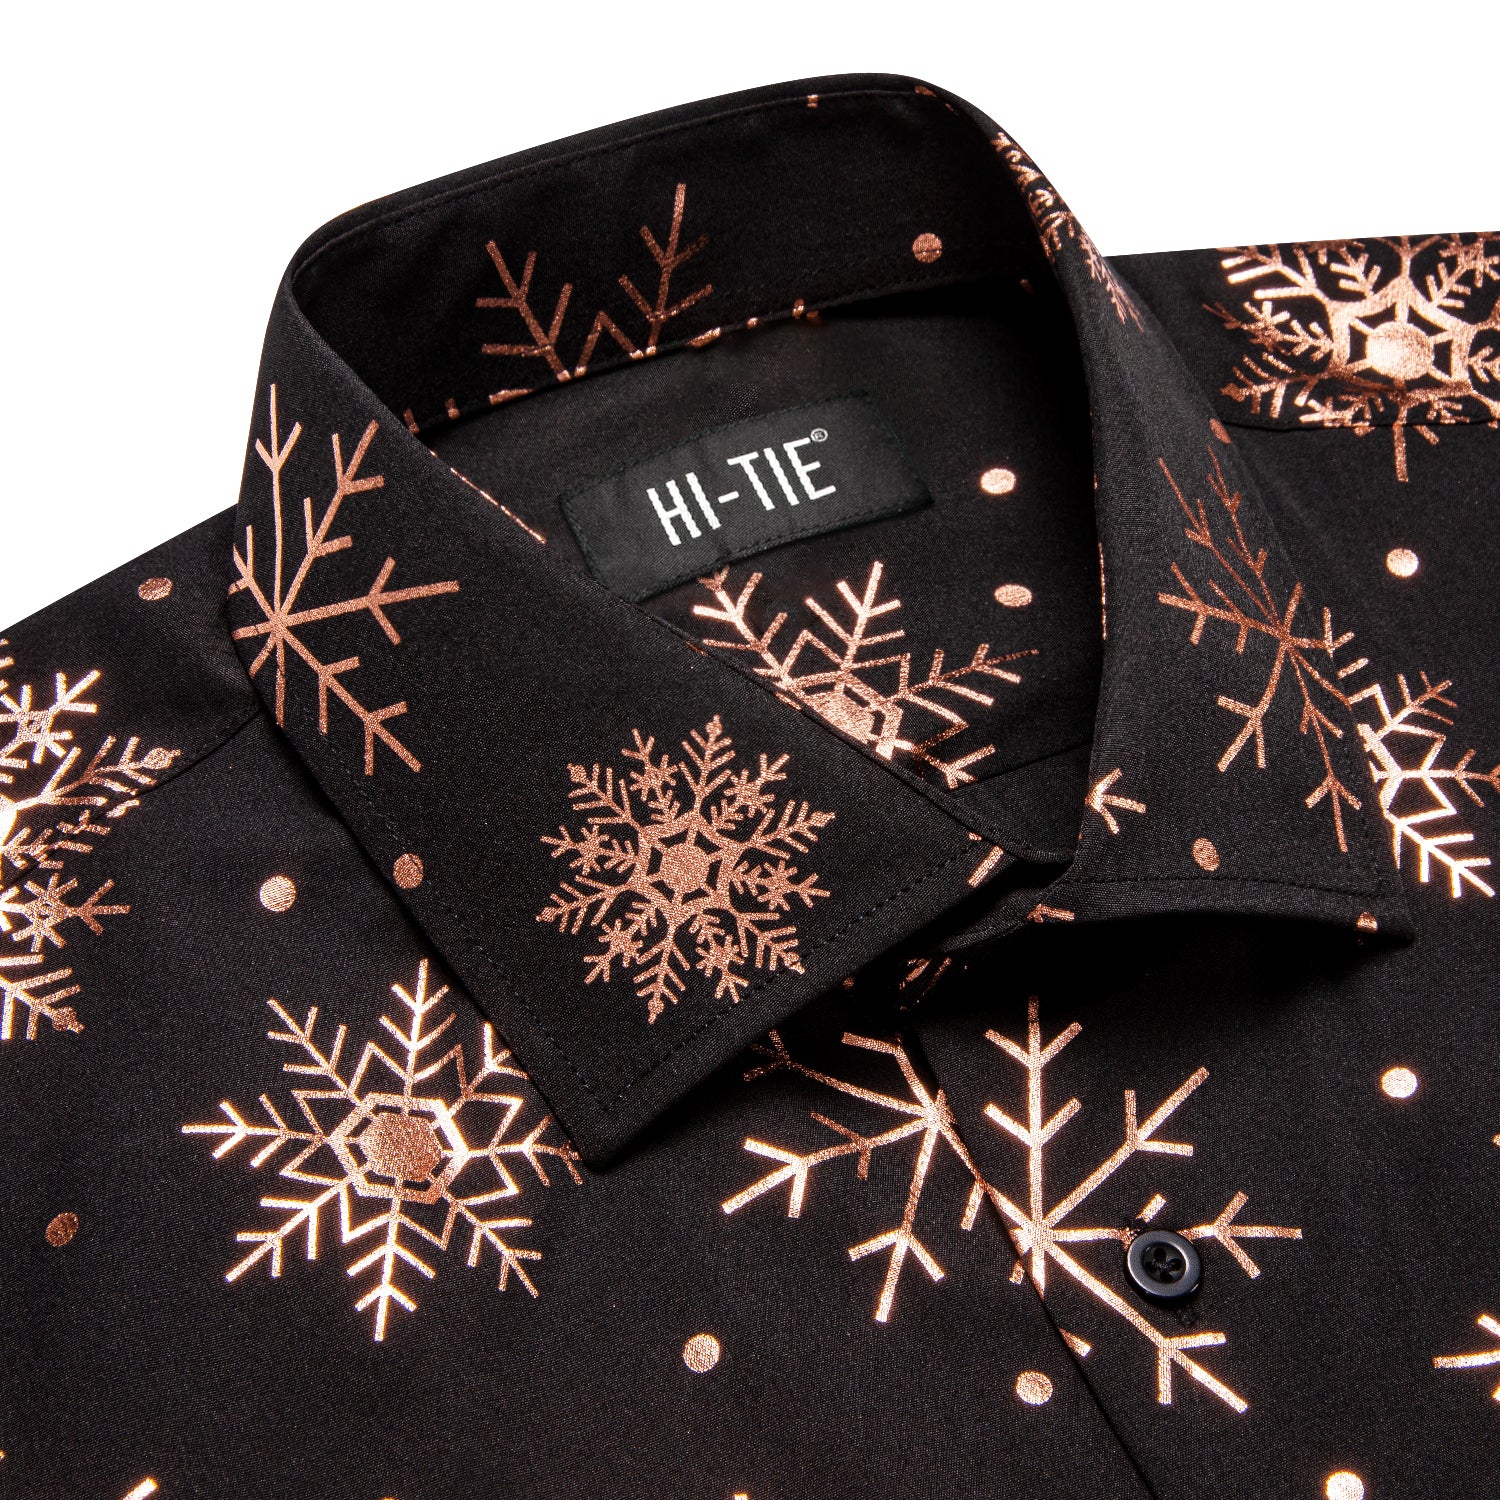 Light Salmon Snowflake Men Long Sleeve Shirt Christmas